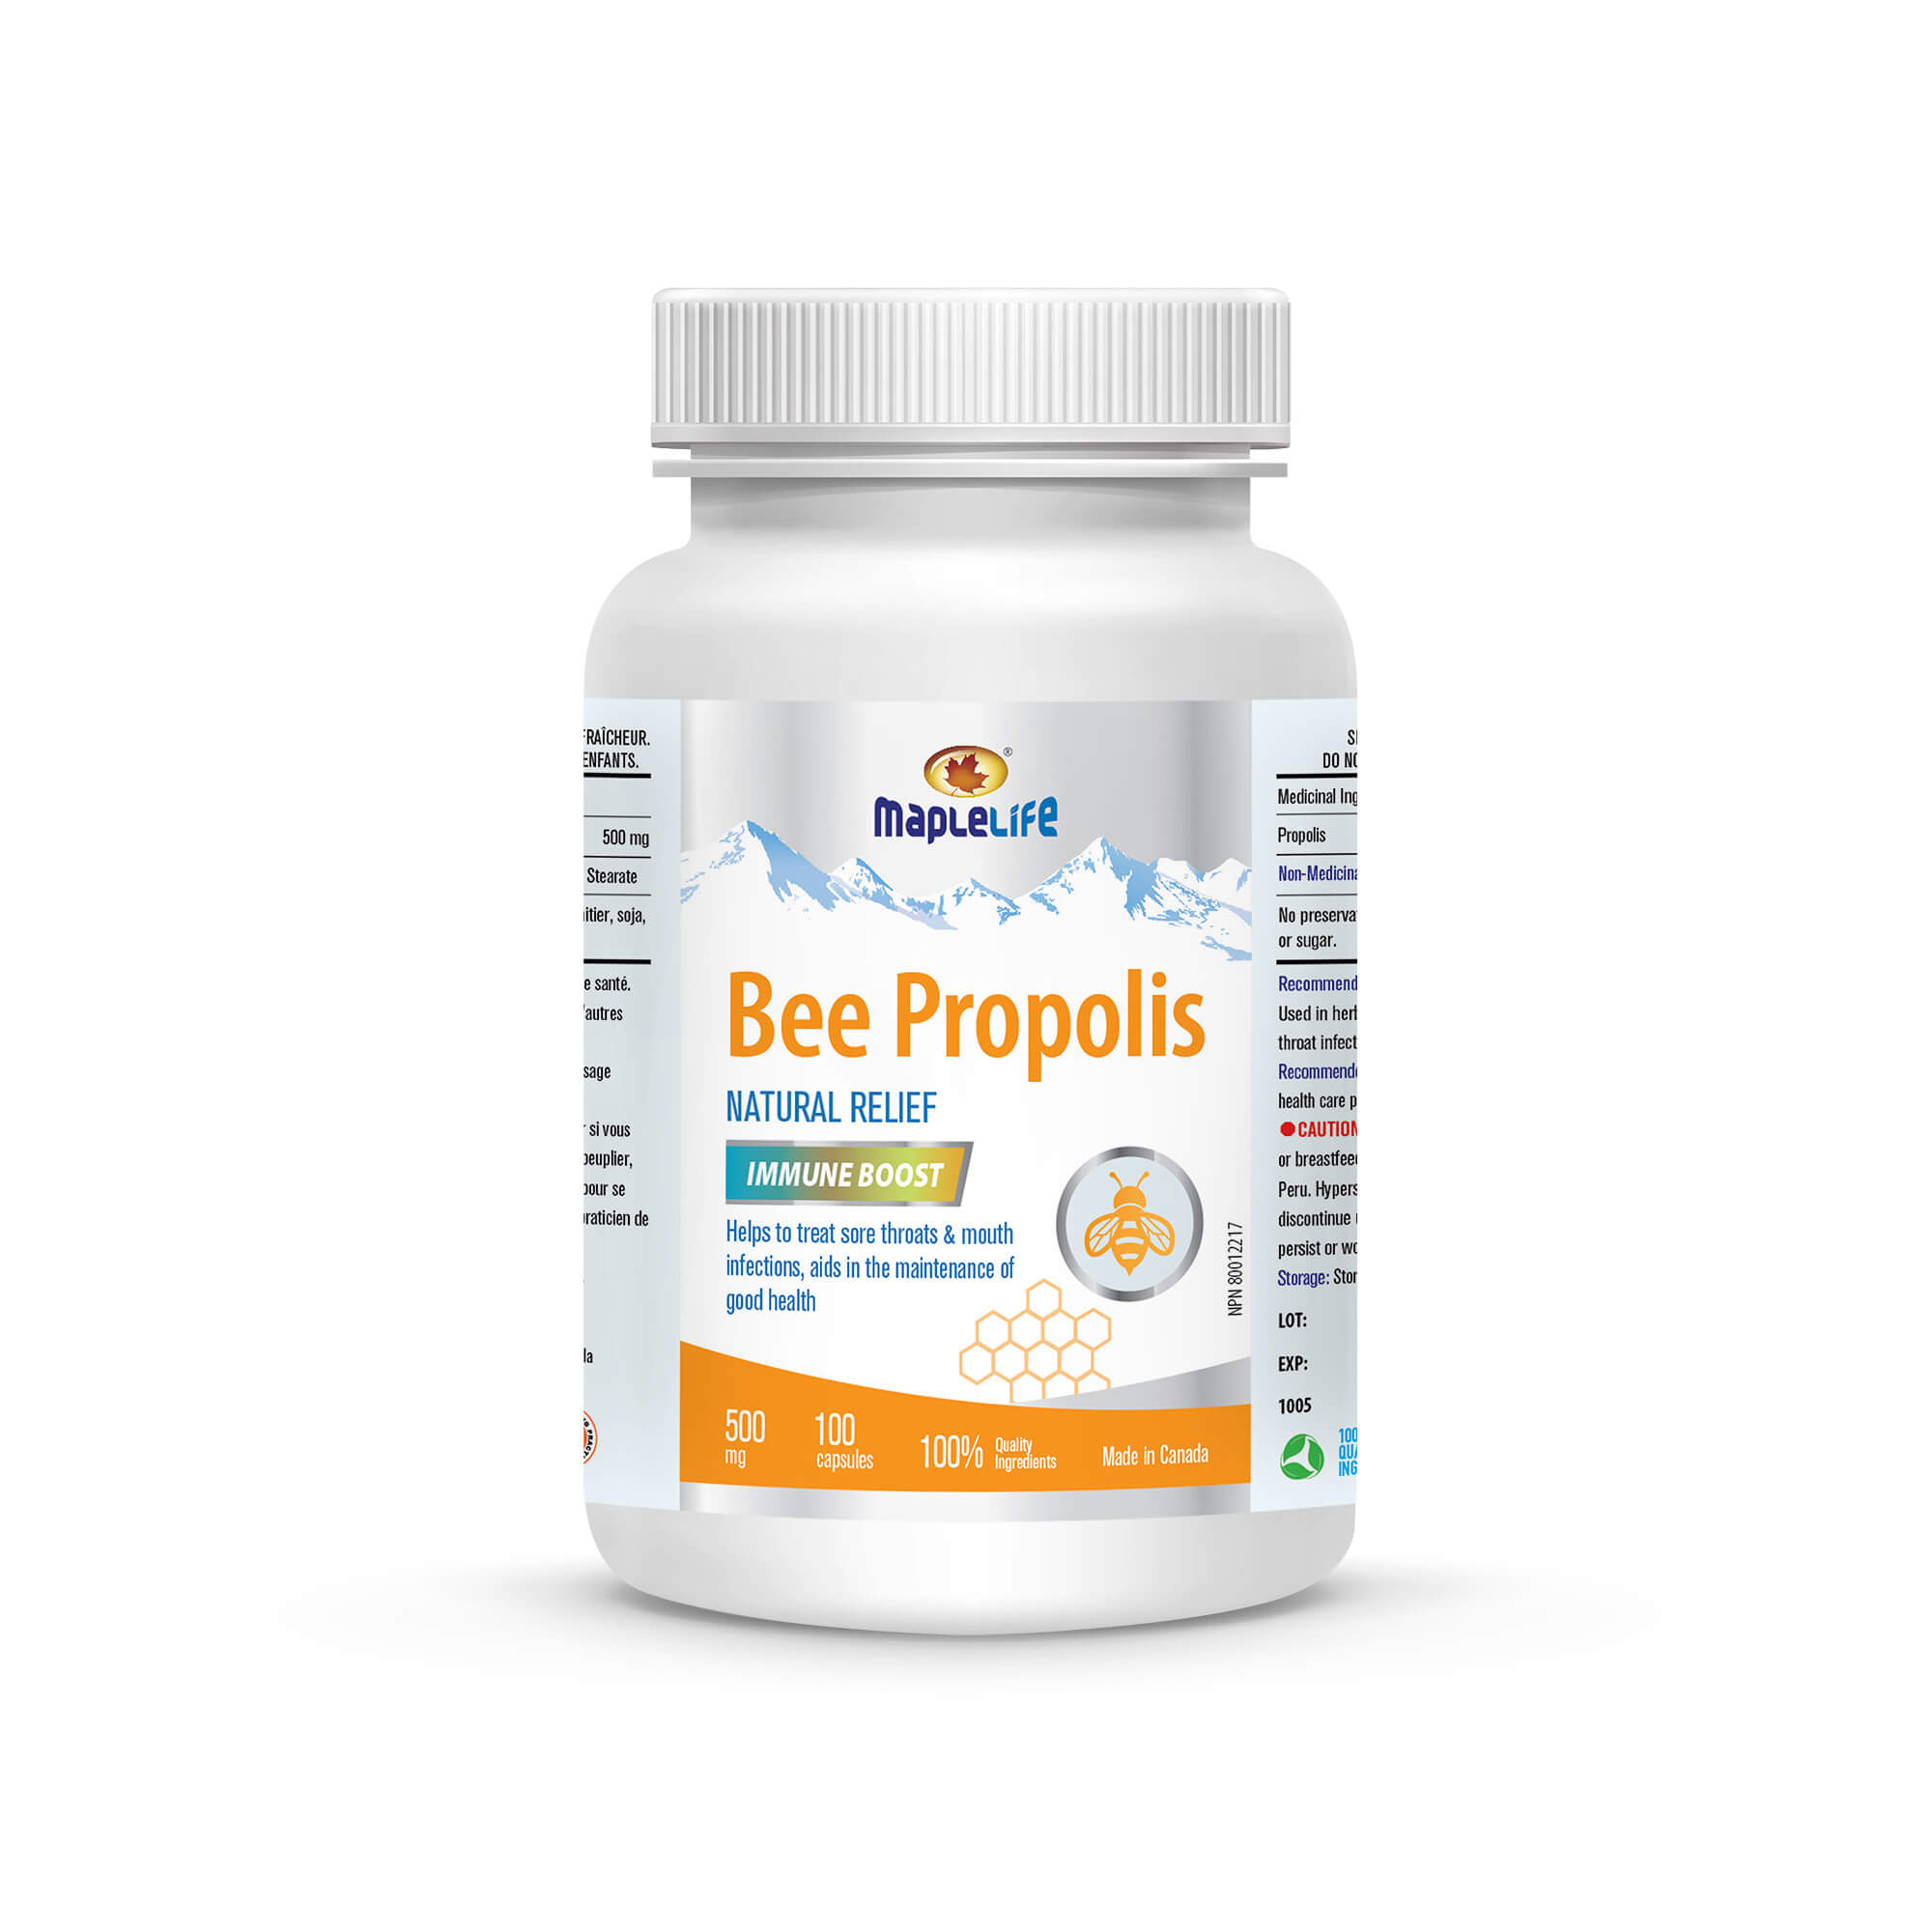 Bee Propolis Product Image